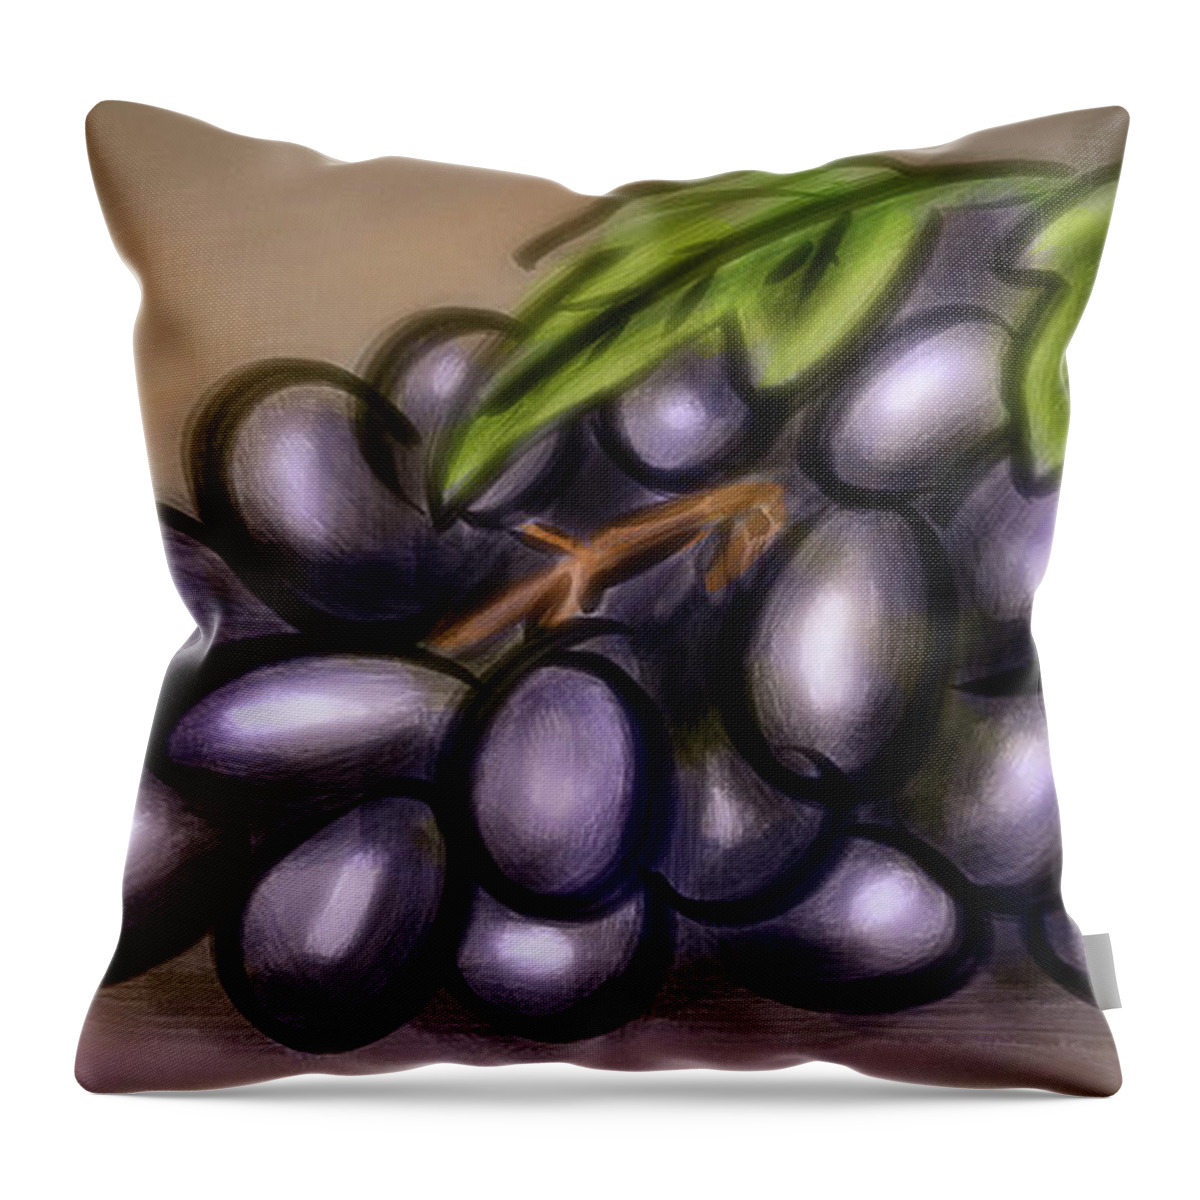 Grapes Throw Pillow featuring the digital art Art - A Bunch of Grapes by Matthias Zegveld